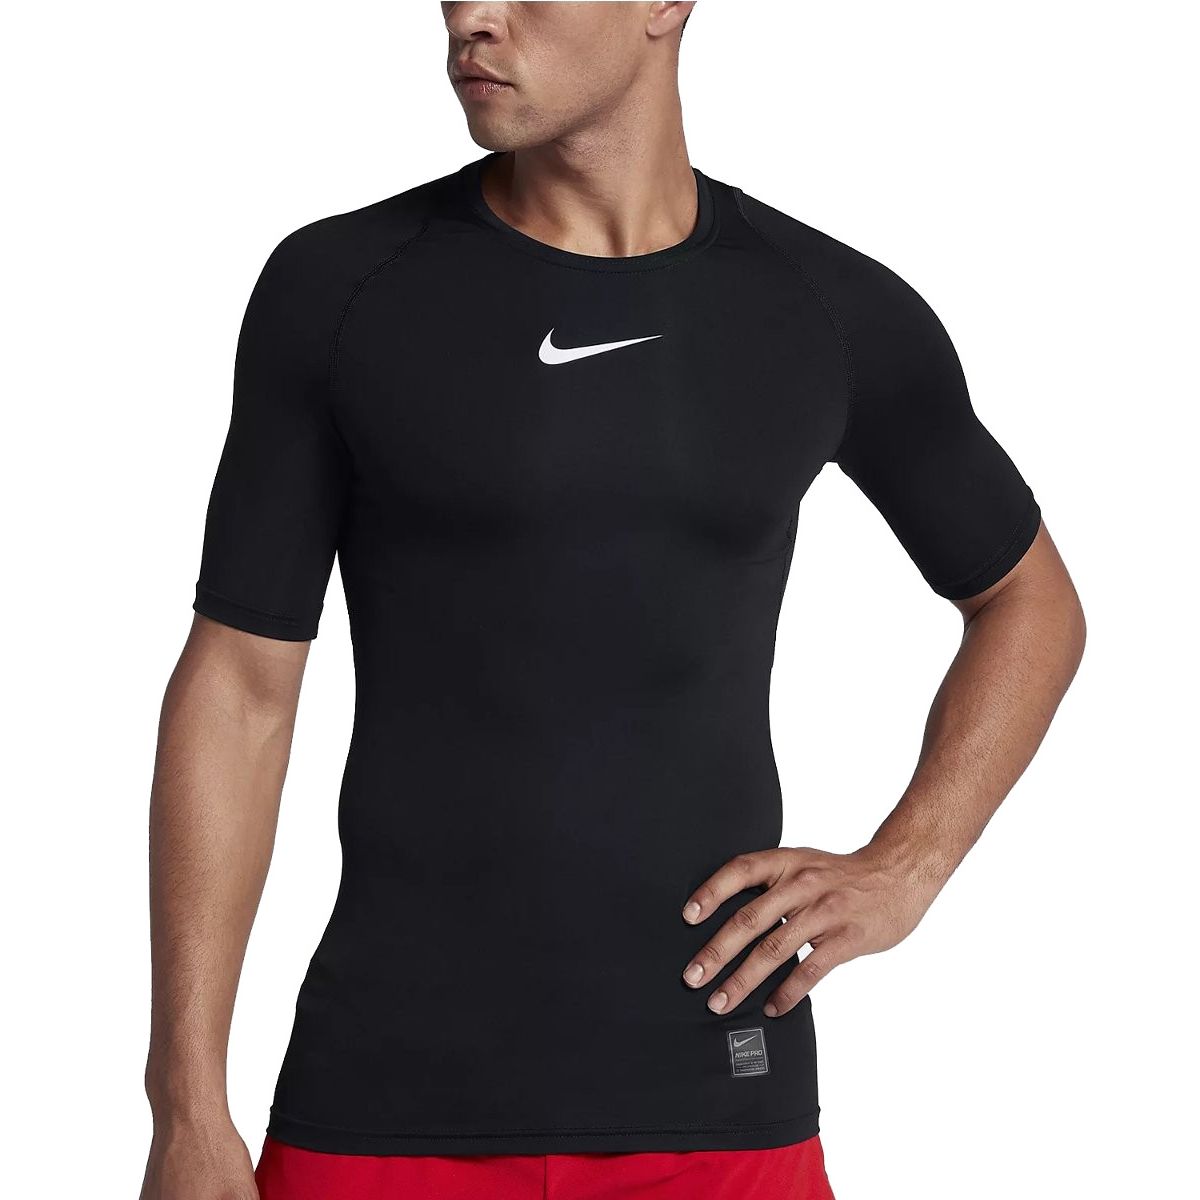 Nike Pro Men's Top 838091-010